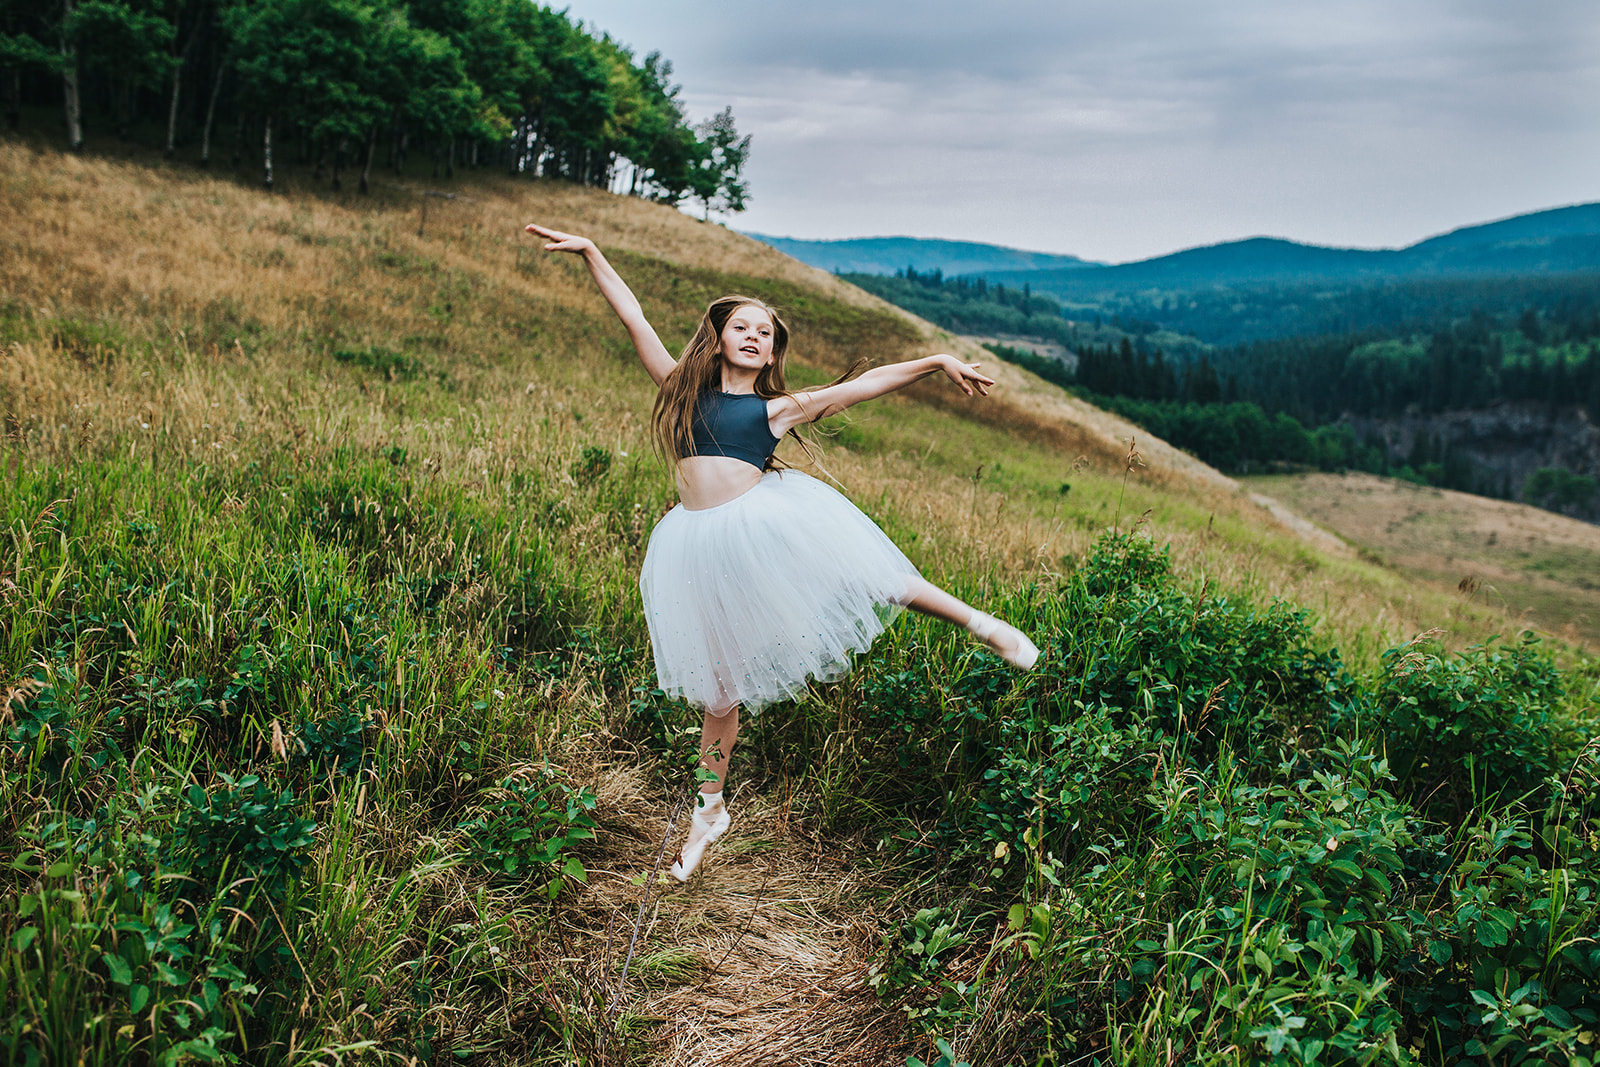 Calgary Portrait Photographer- Ballet Portrait In The Mountains